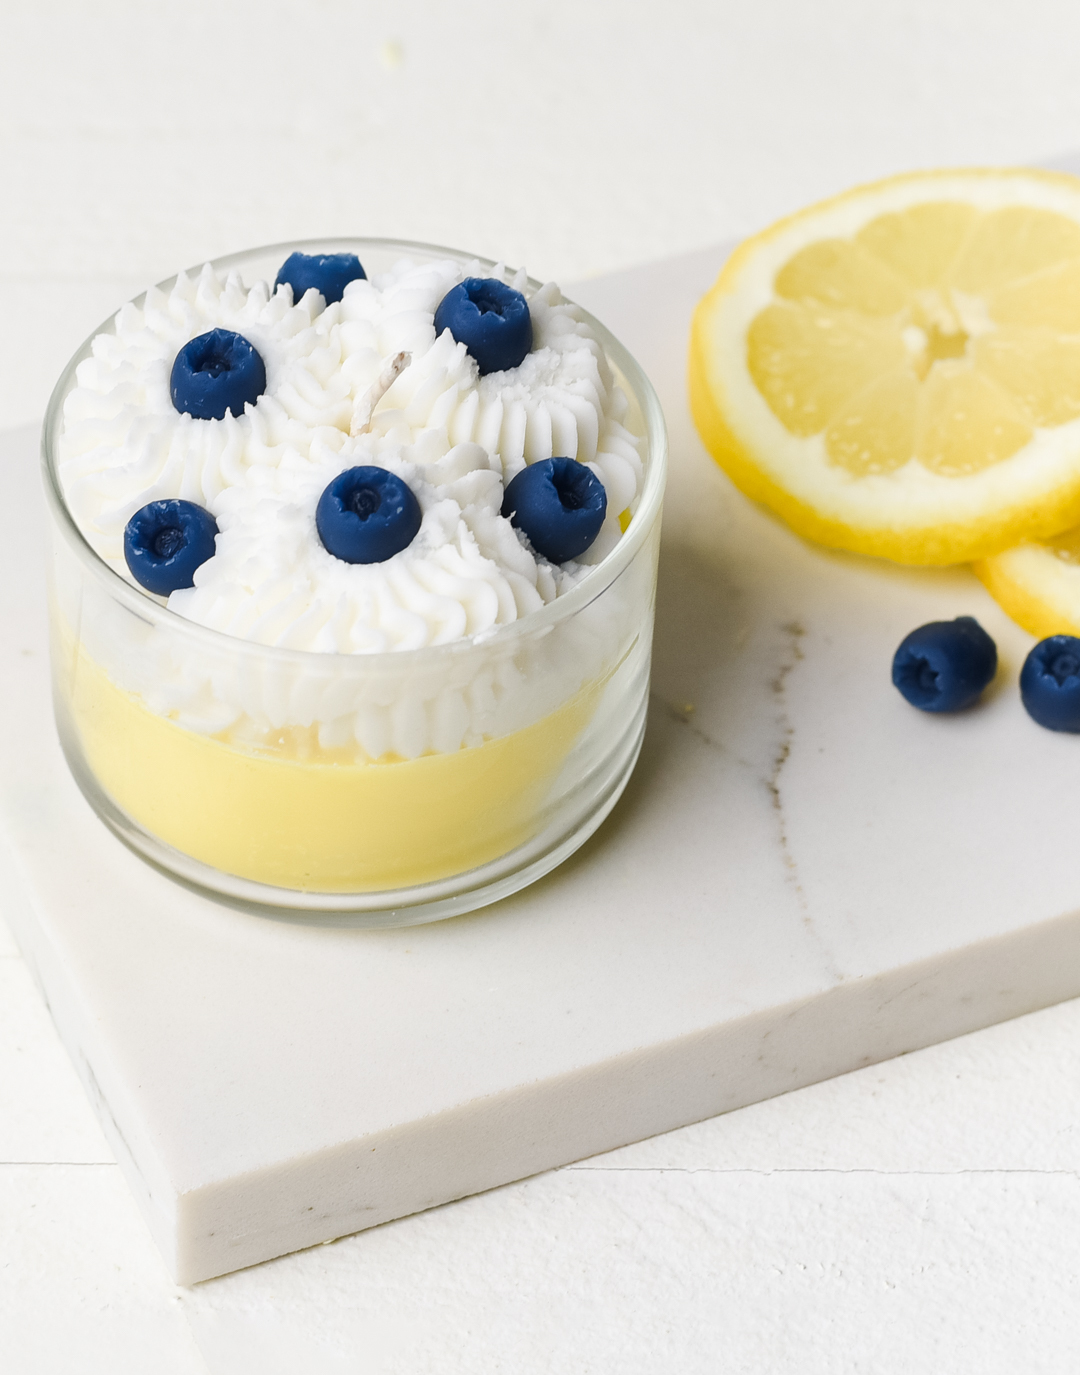 Lemon dessert candle.